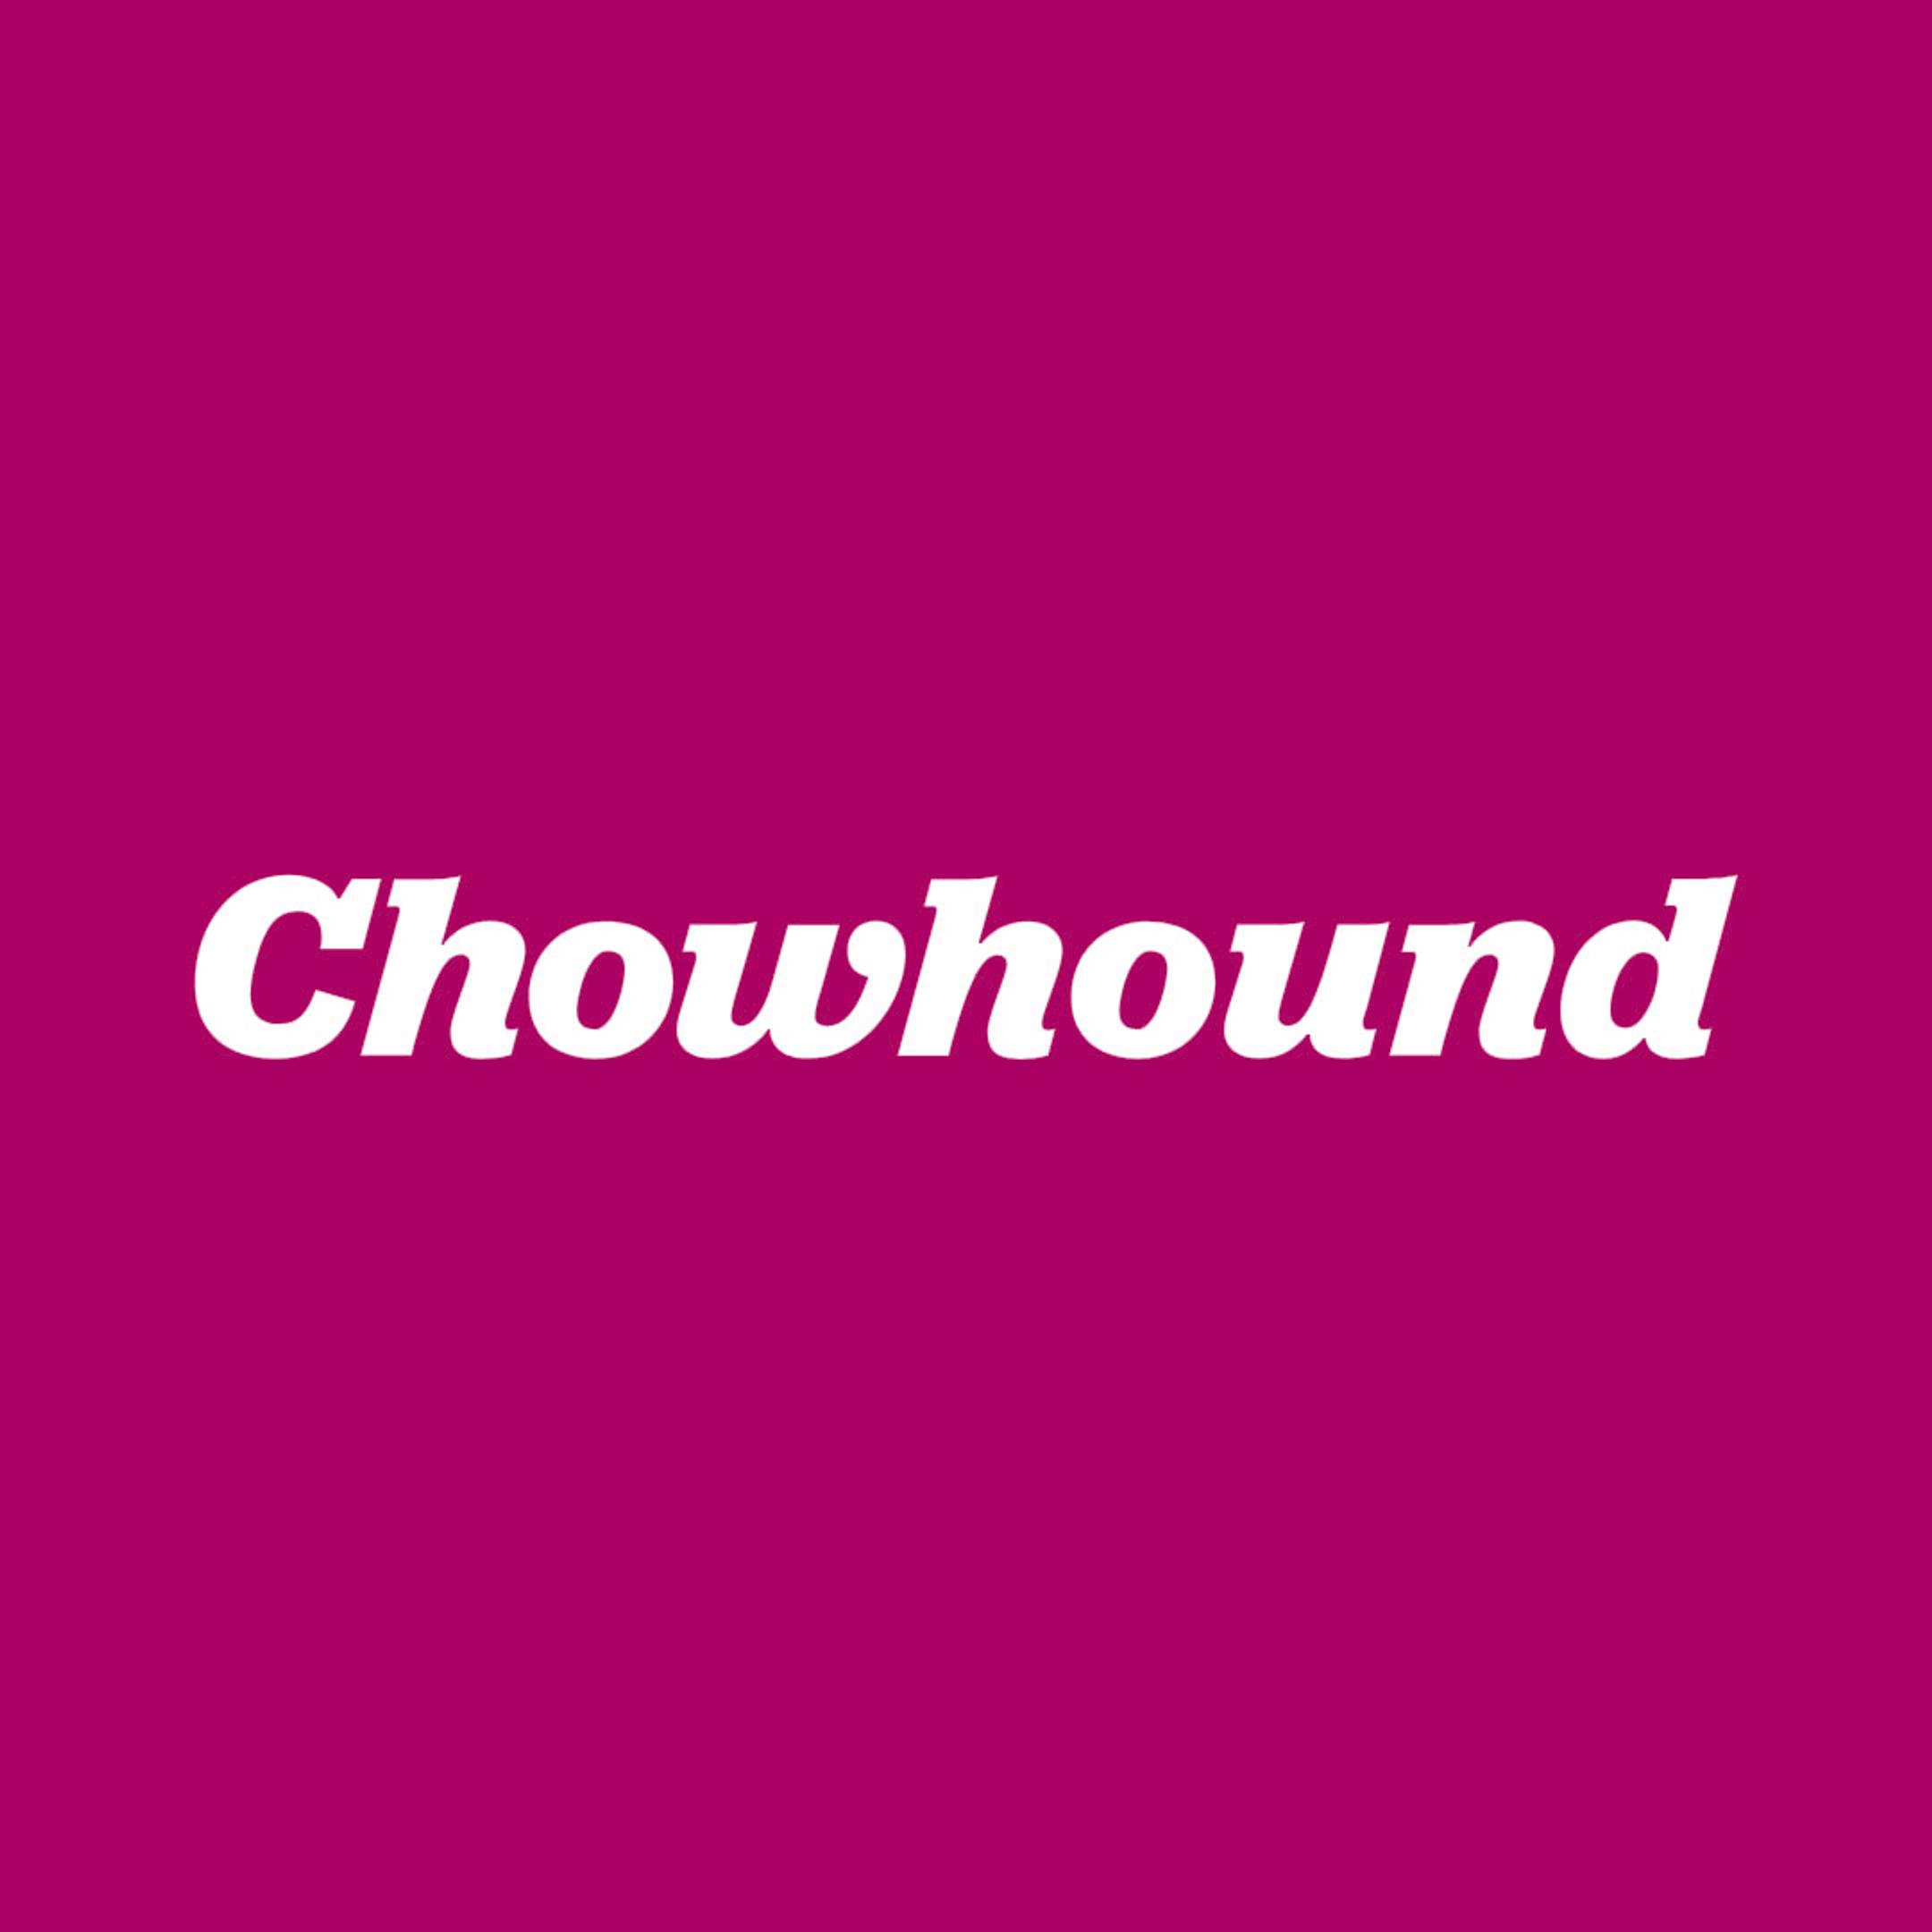 Chowhound logo on magenta background 